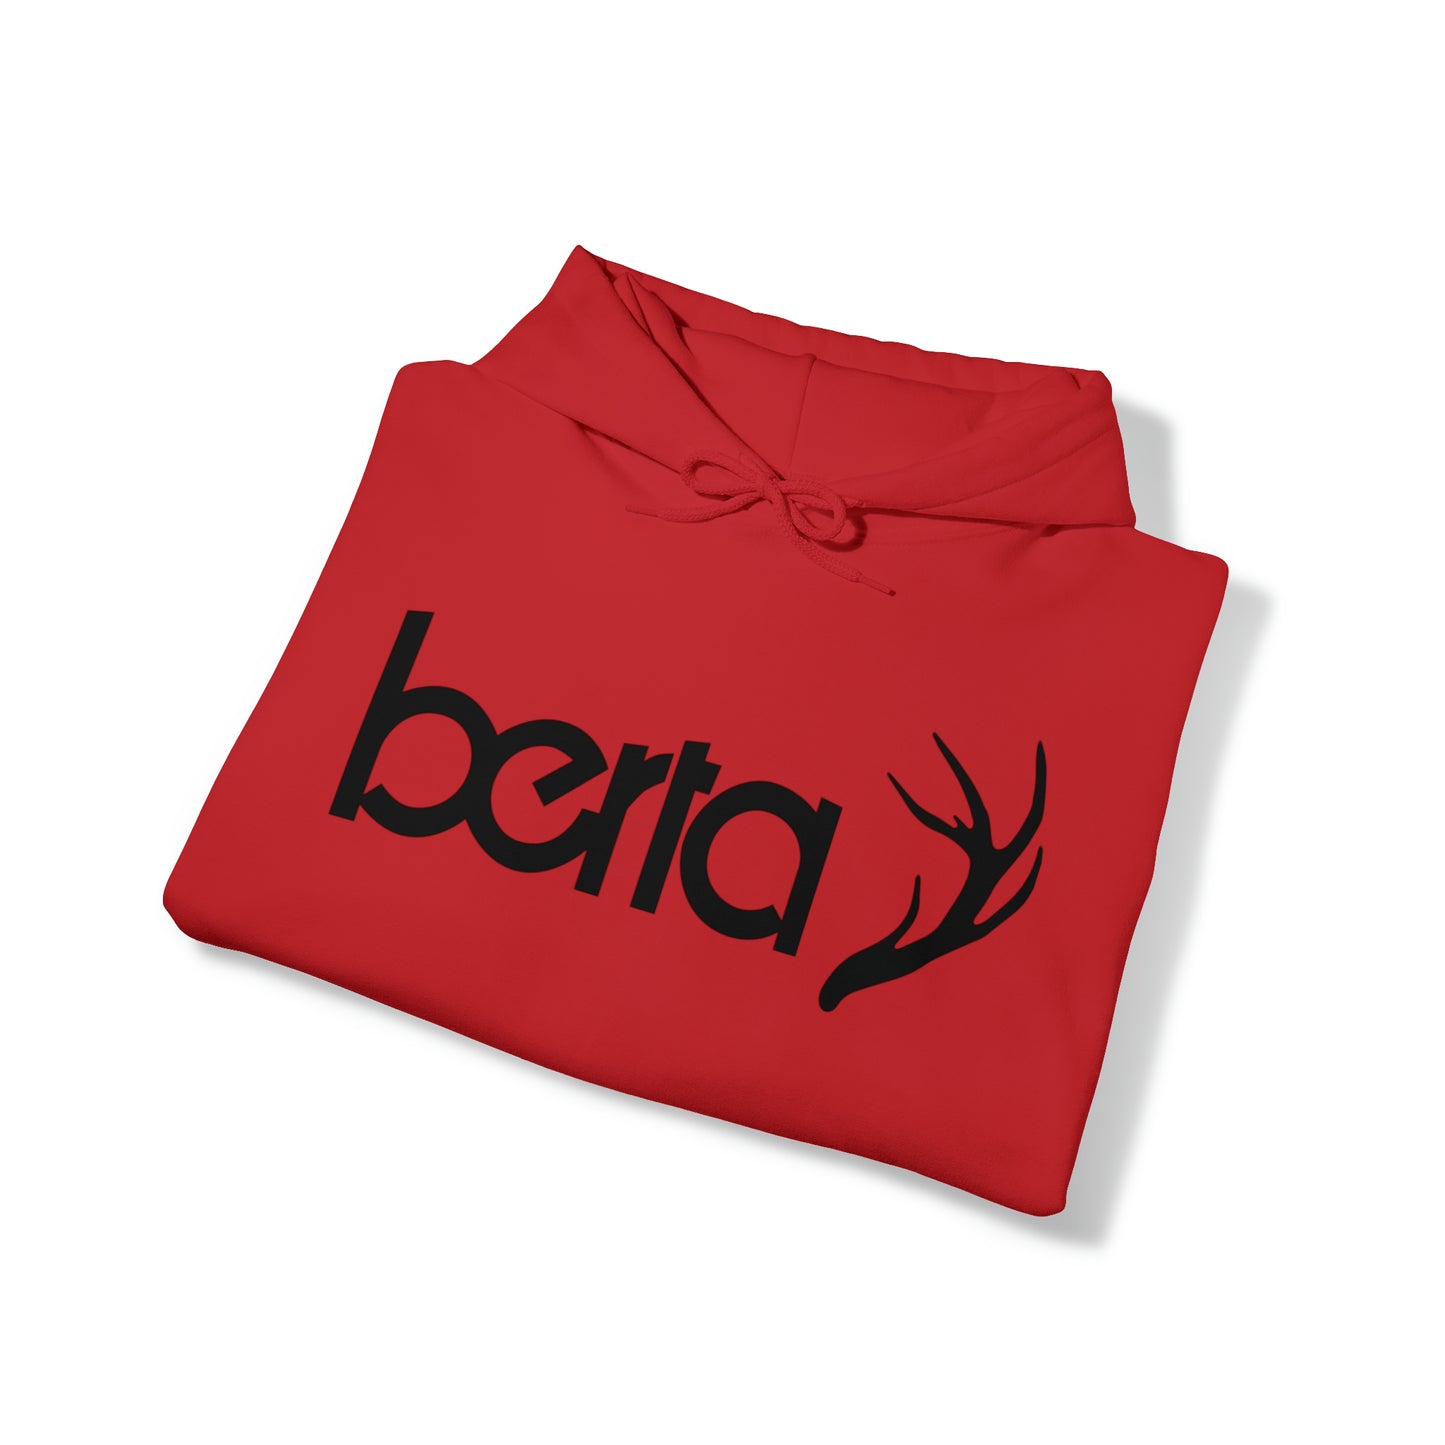 BERTA Unisex Heavy Blend™ Hooded Sweatshirt